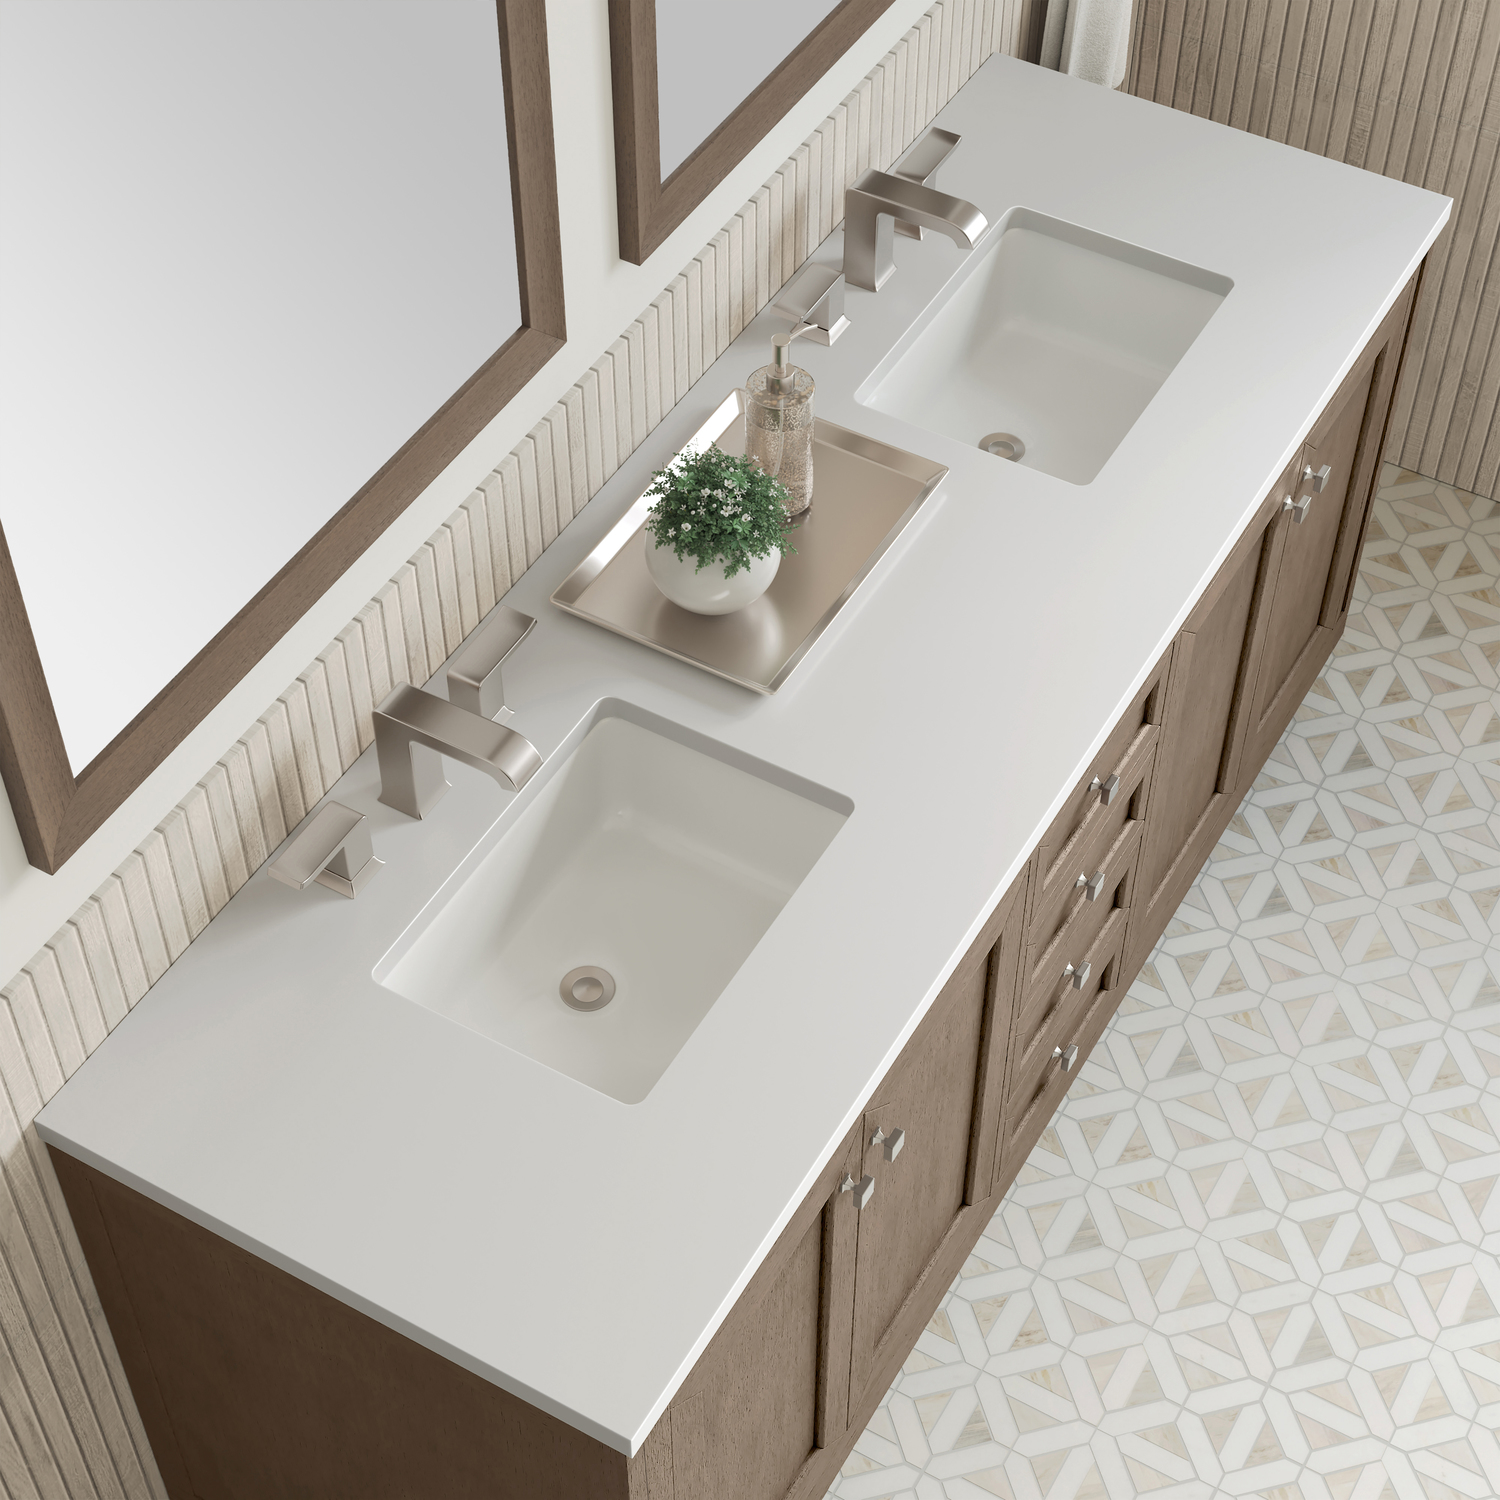 bathroom vanity 72 inch double sink James Martin Vanity Whitewashed Walnut Contemporary/Modern, Transitional